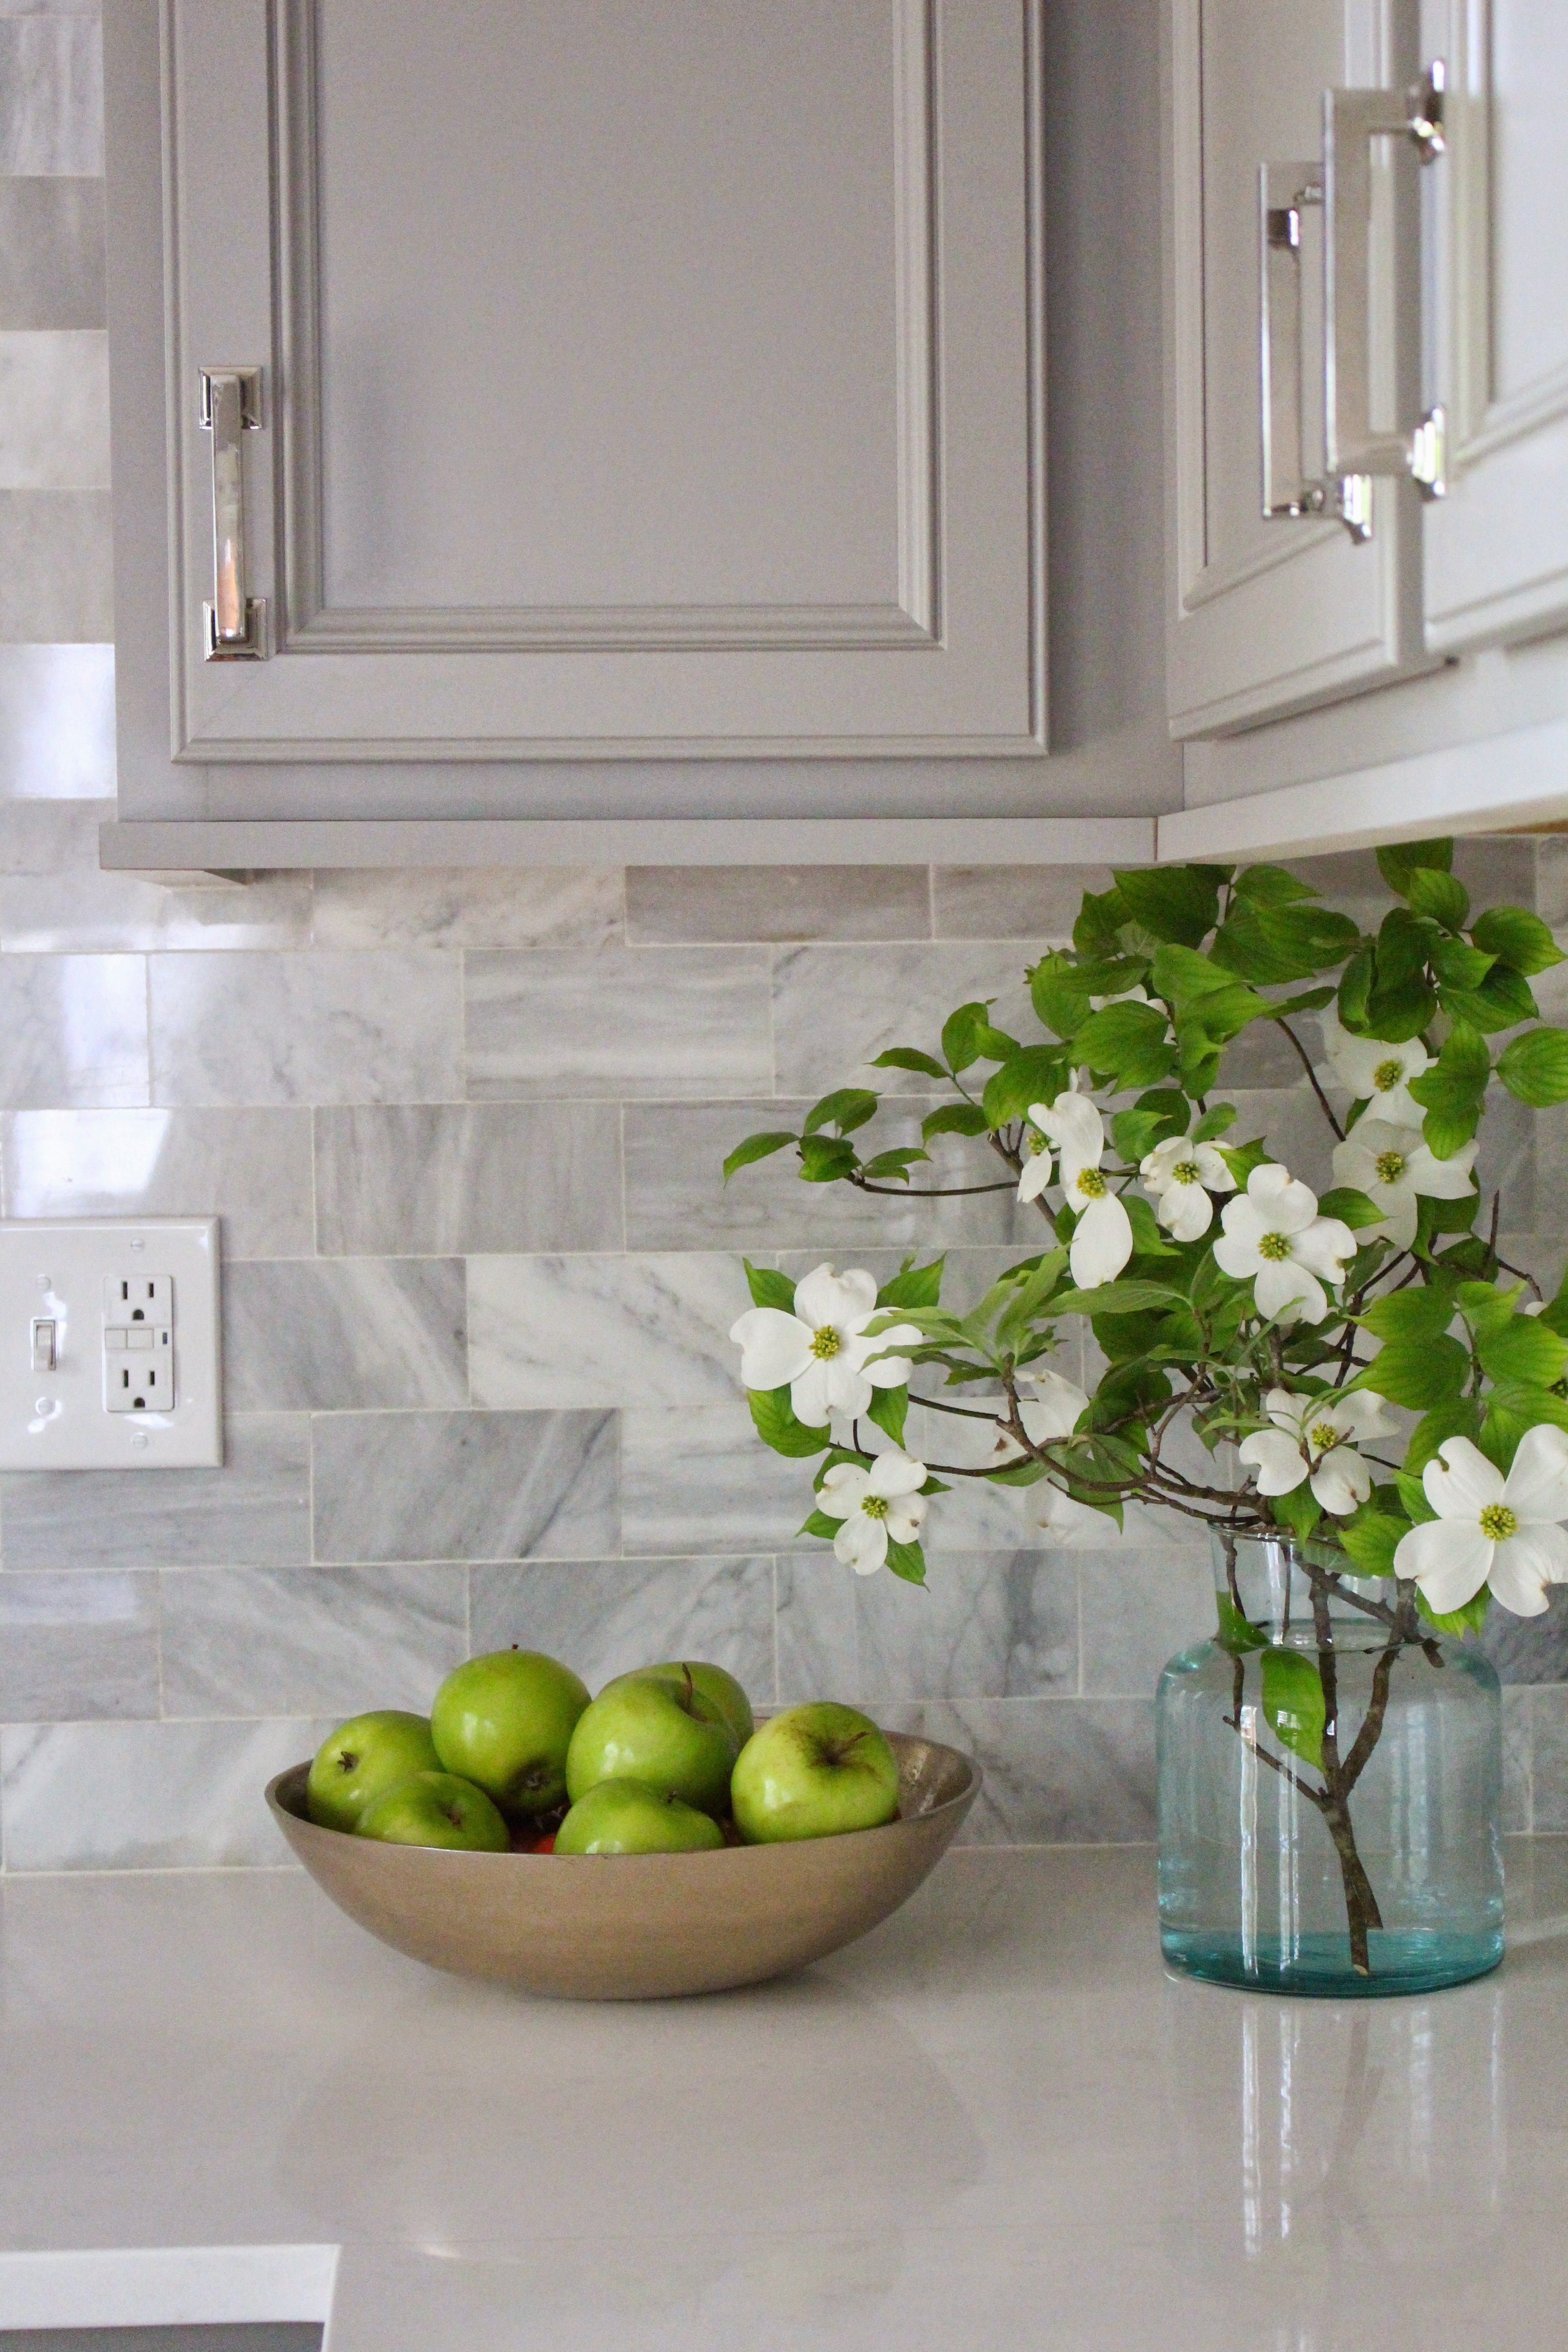 Venatino Carrera Marble Backsplash 3×6 subway tile kitchen renovation